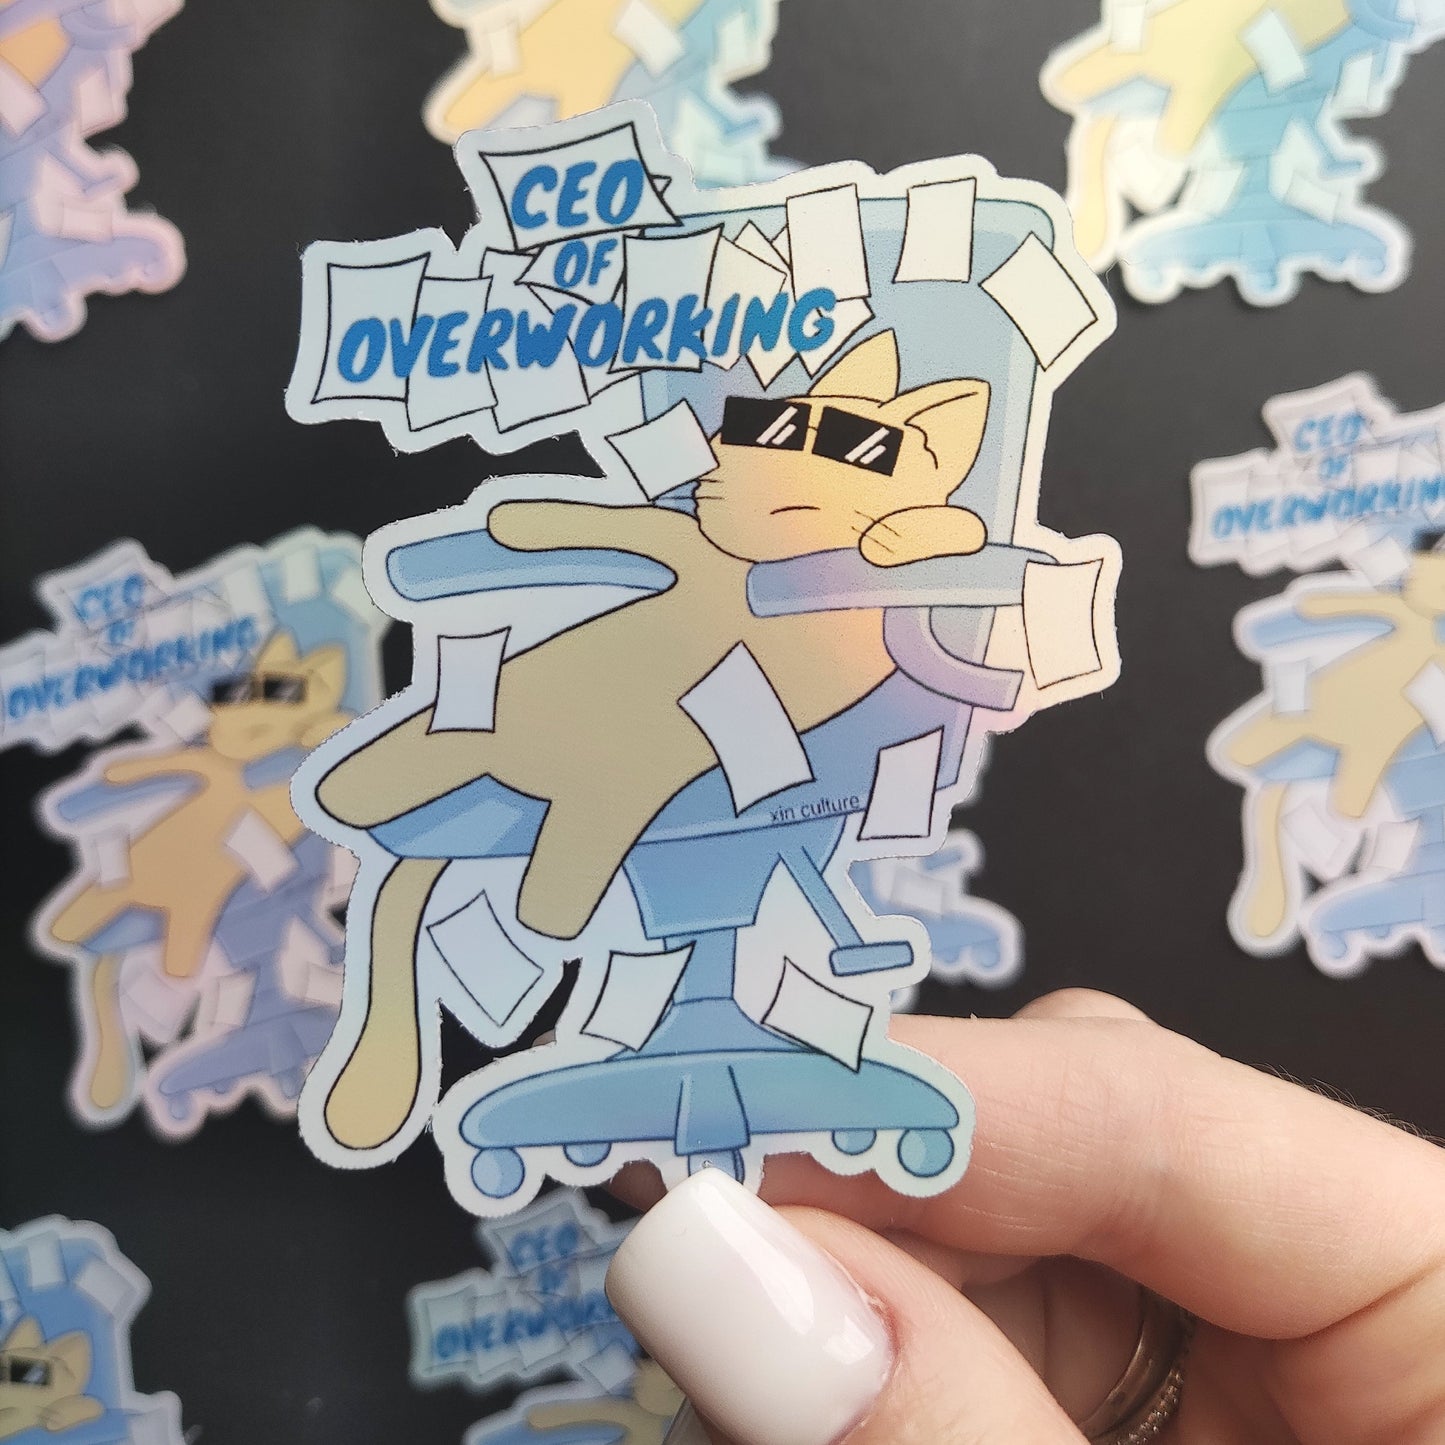 "CEO of OVERWORKING” cat sticker